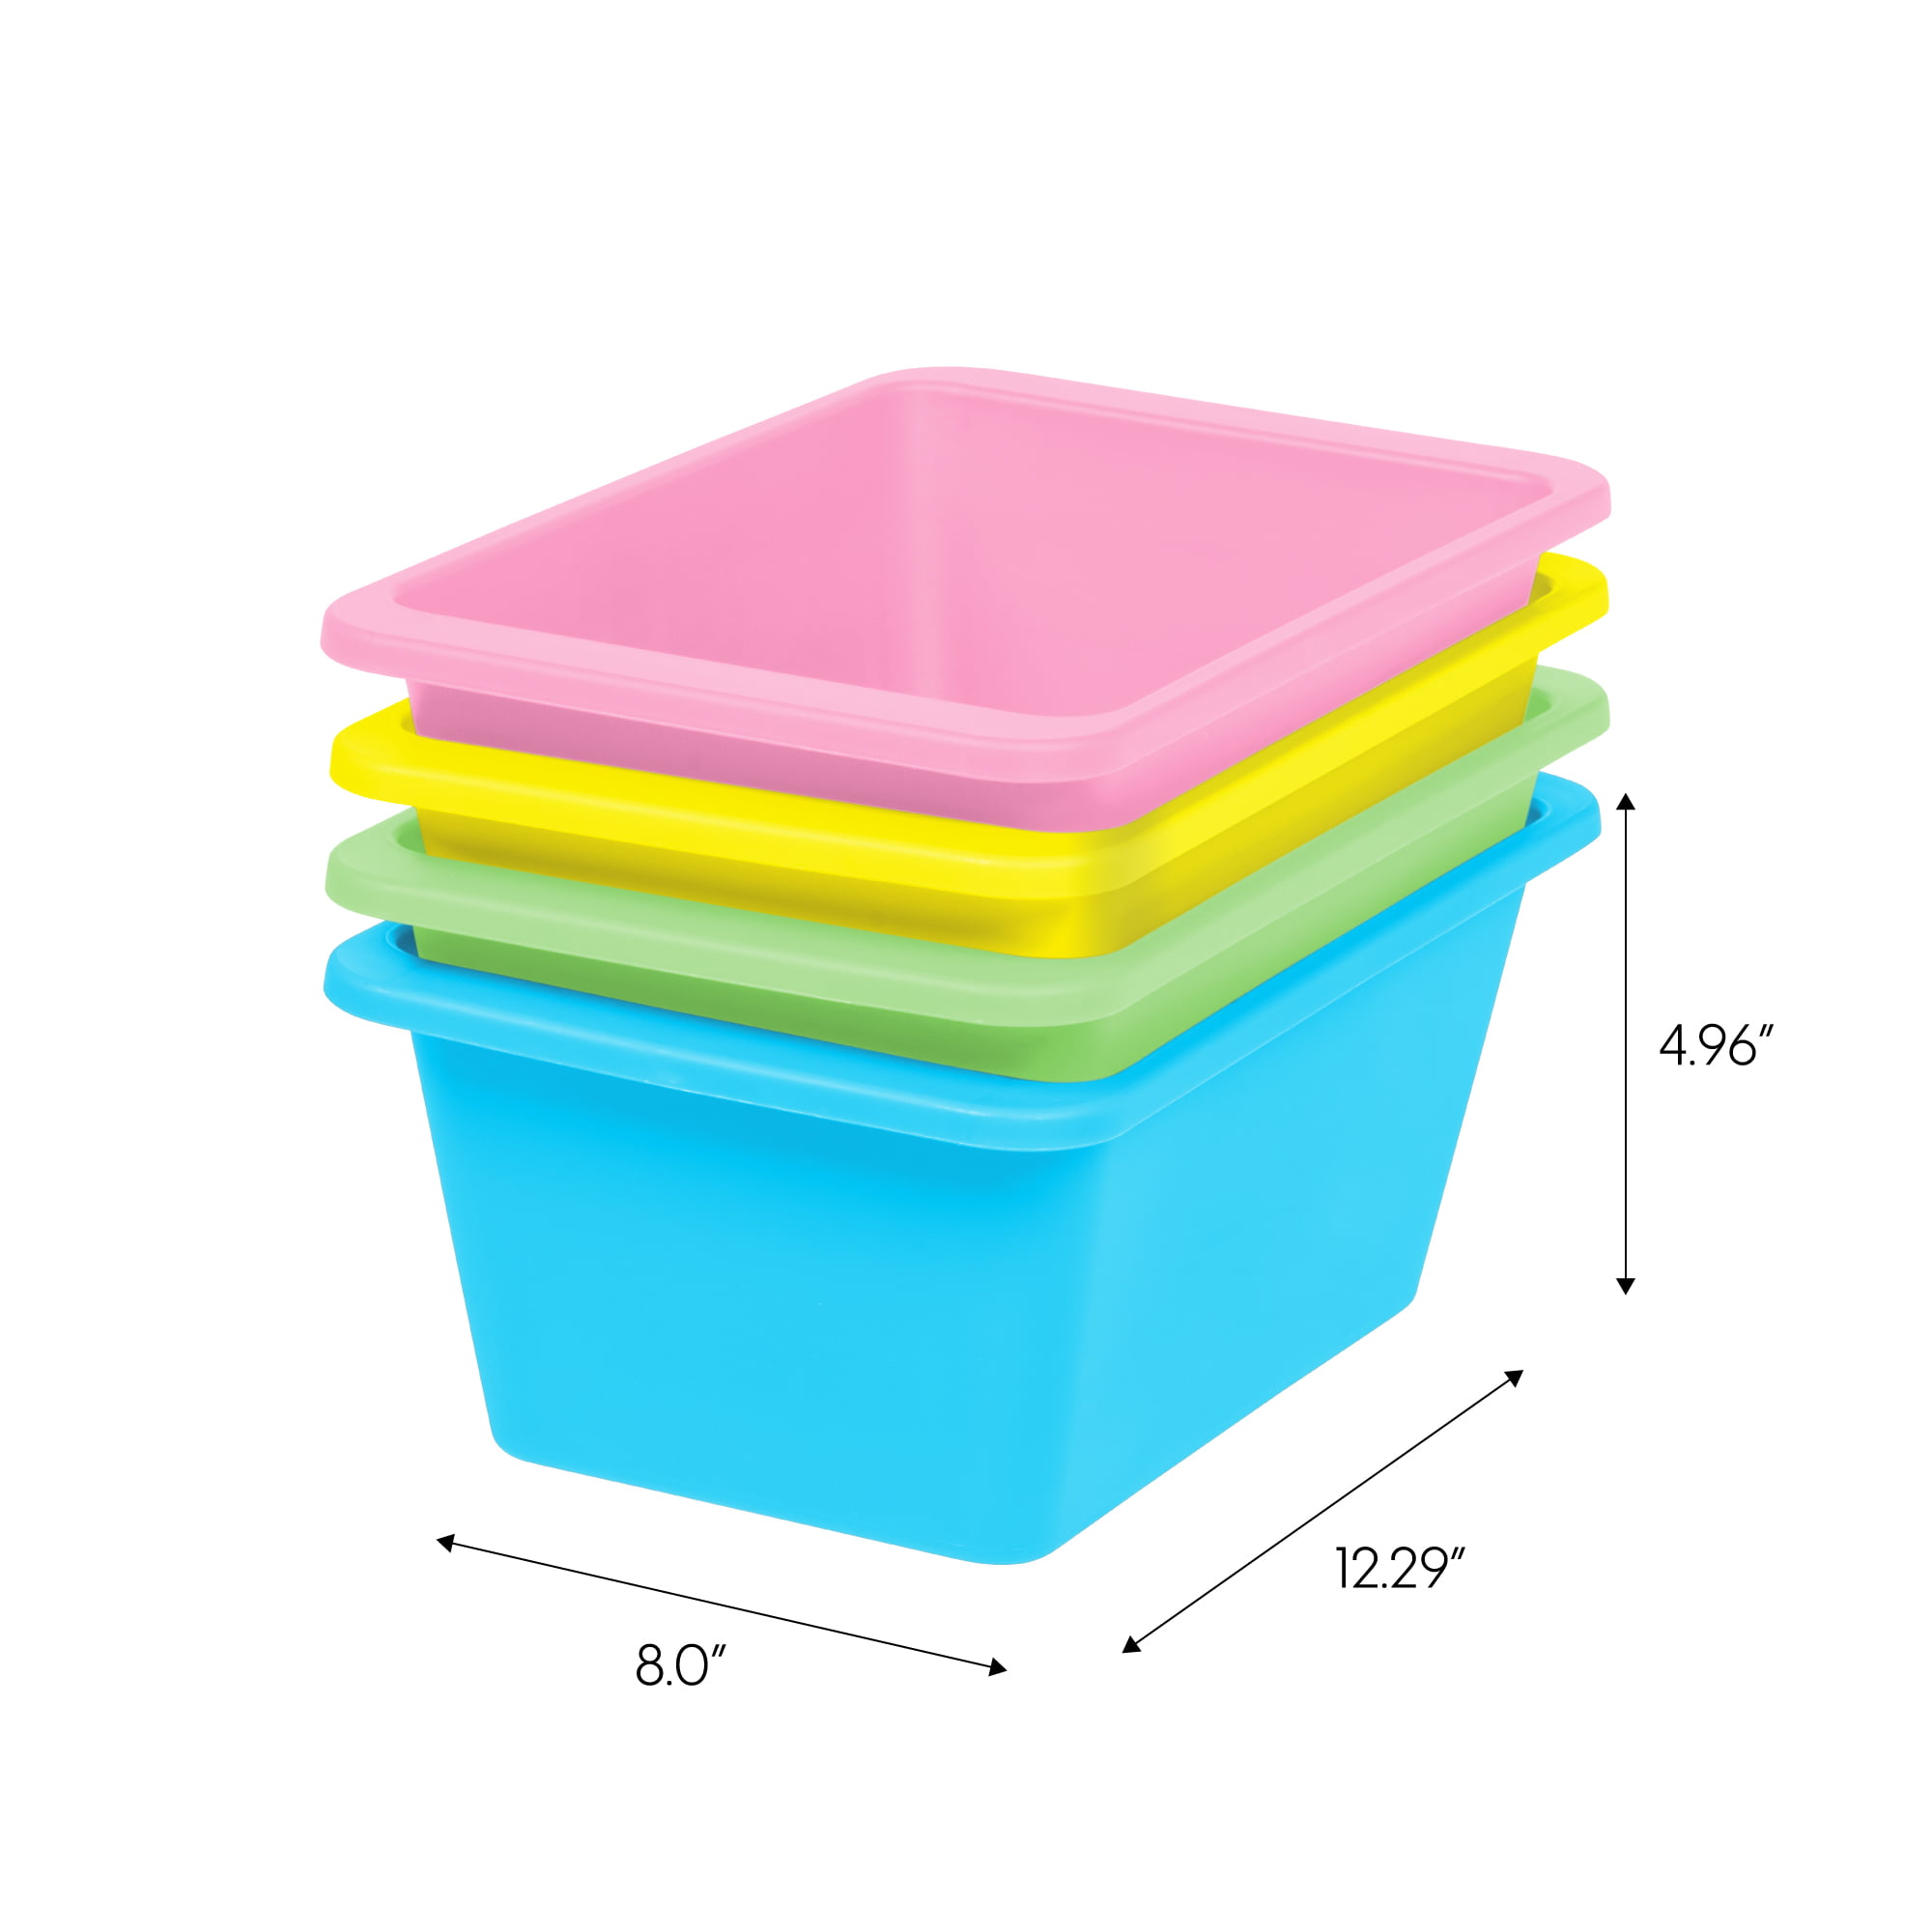 The Teachers' Lounge®  Pink Large Plastic Storage Bin